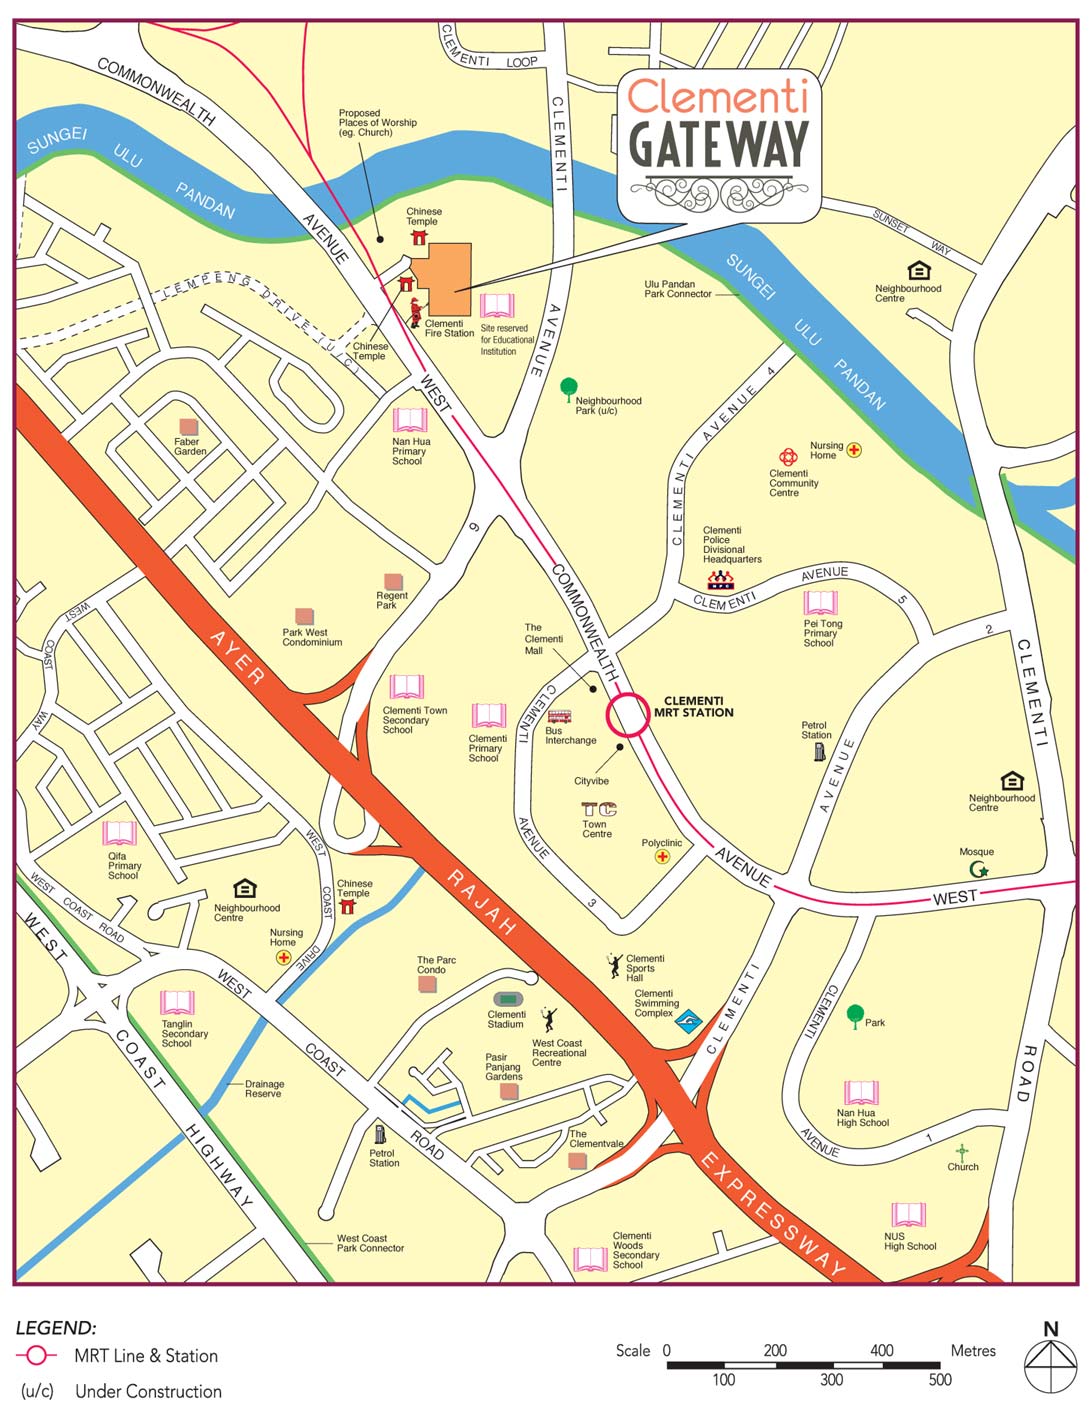 Clementi-gateway-map-location.jpg